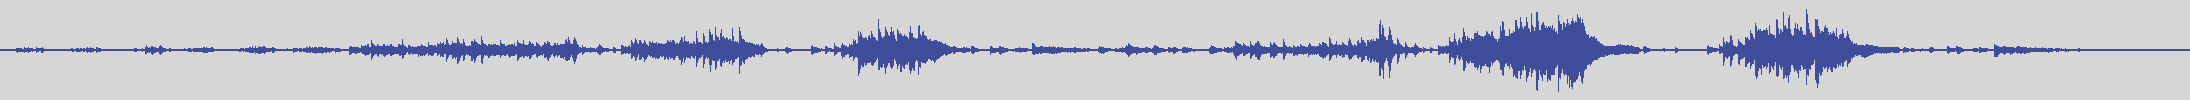 big_music_classic [BMC011] Marco Noia - To Zanarkand [] audio wave form